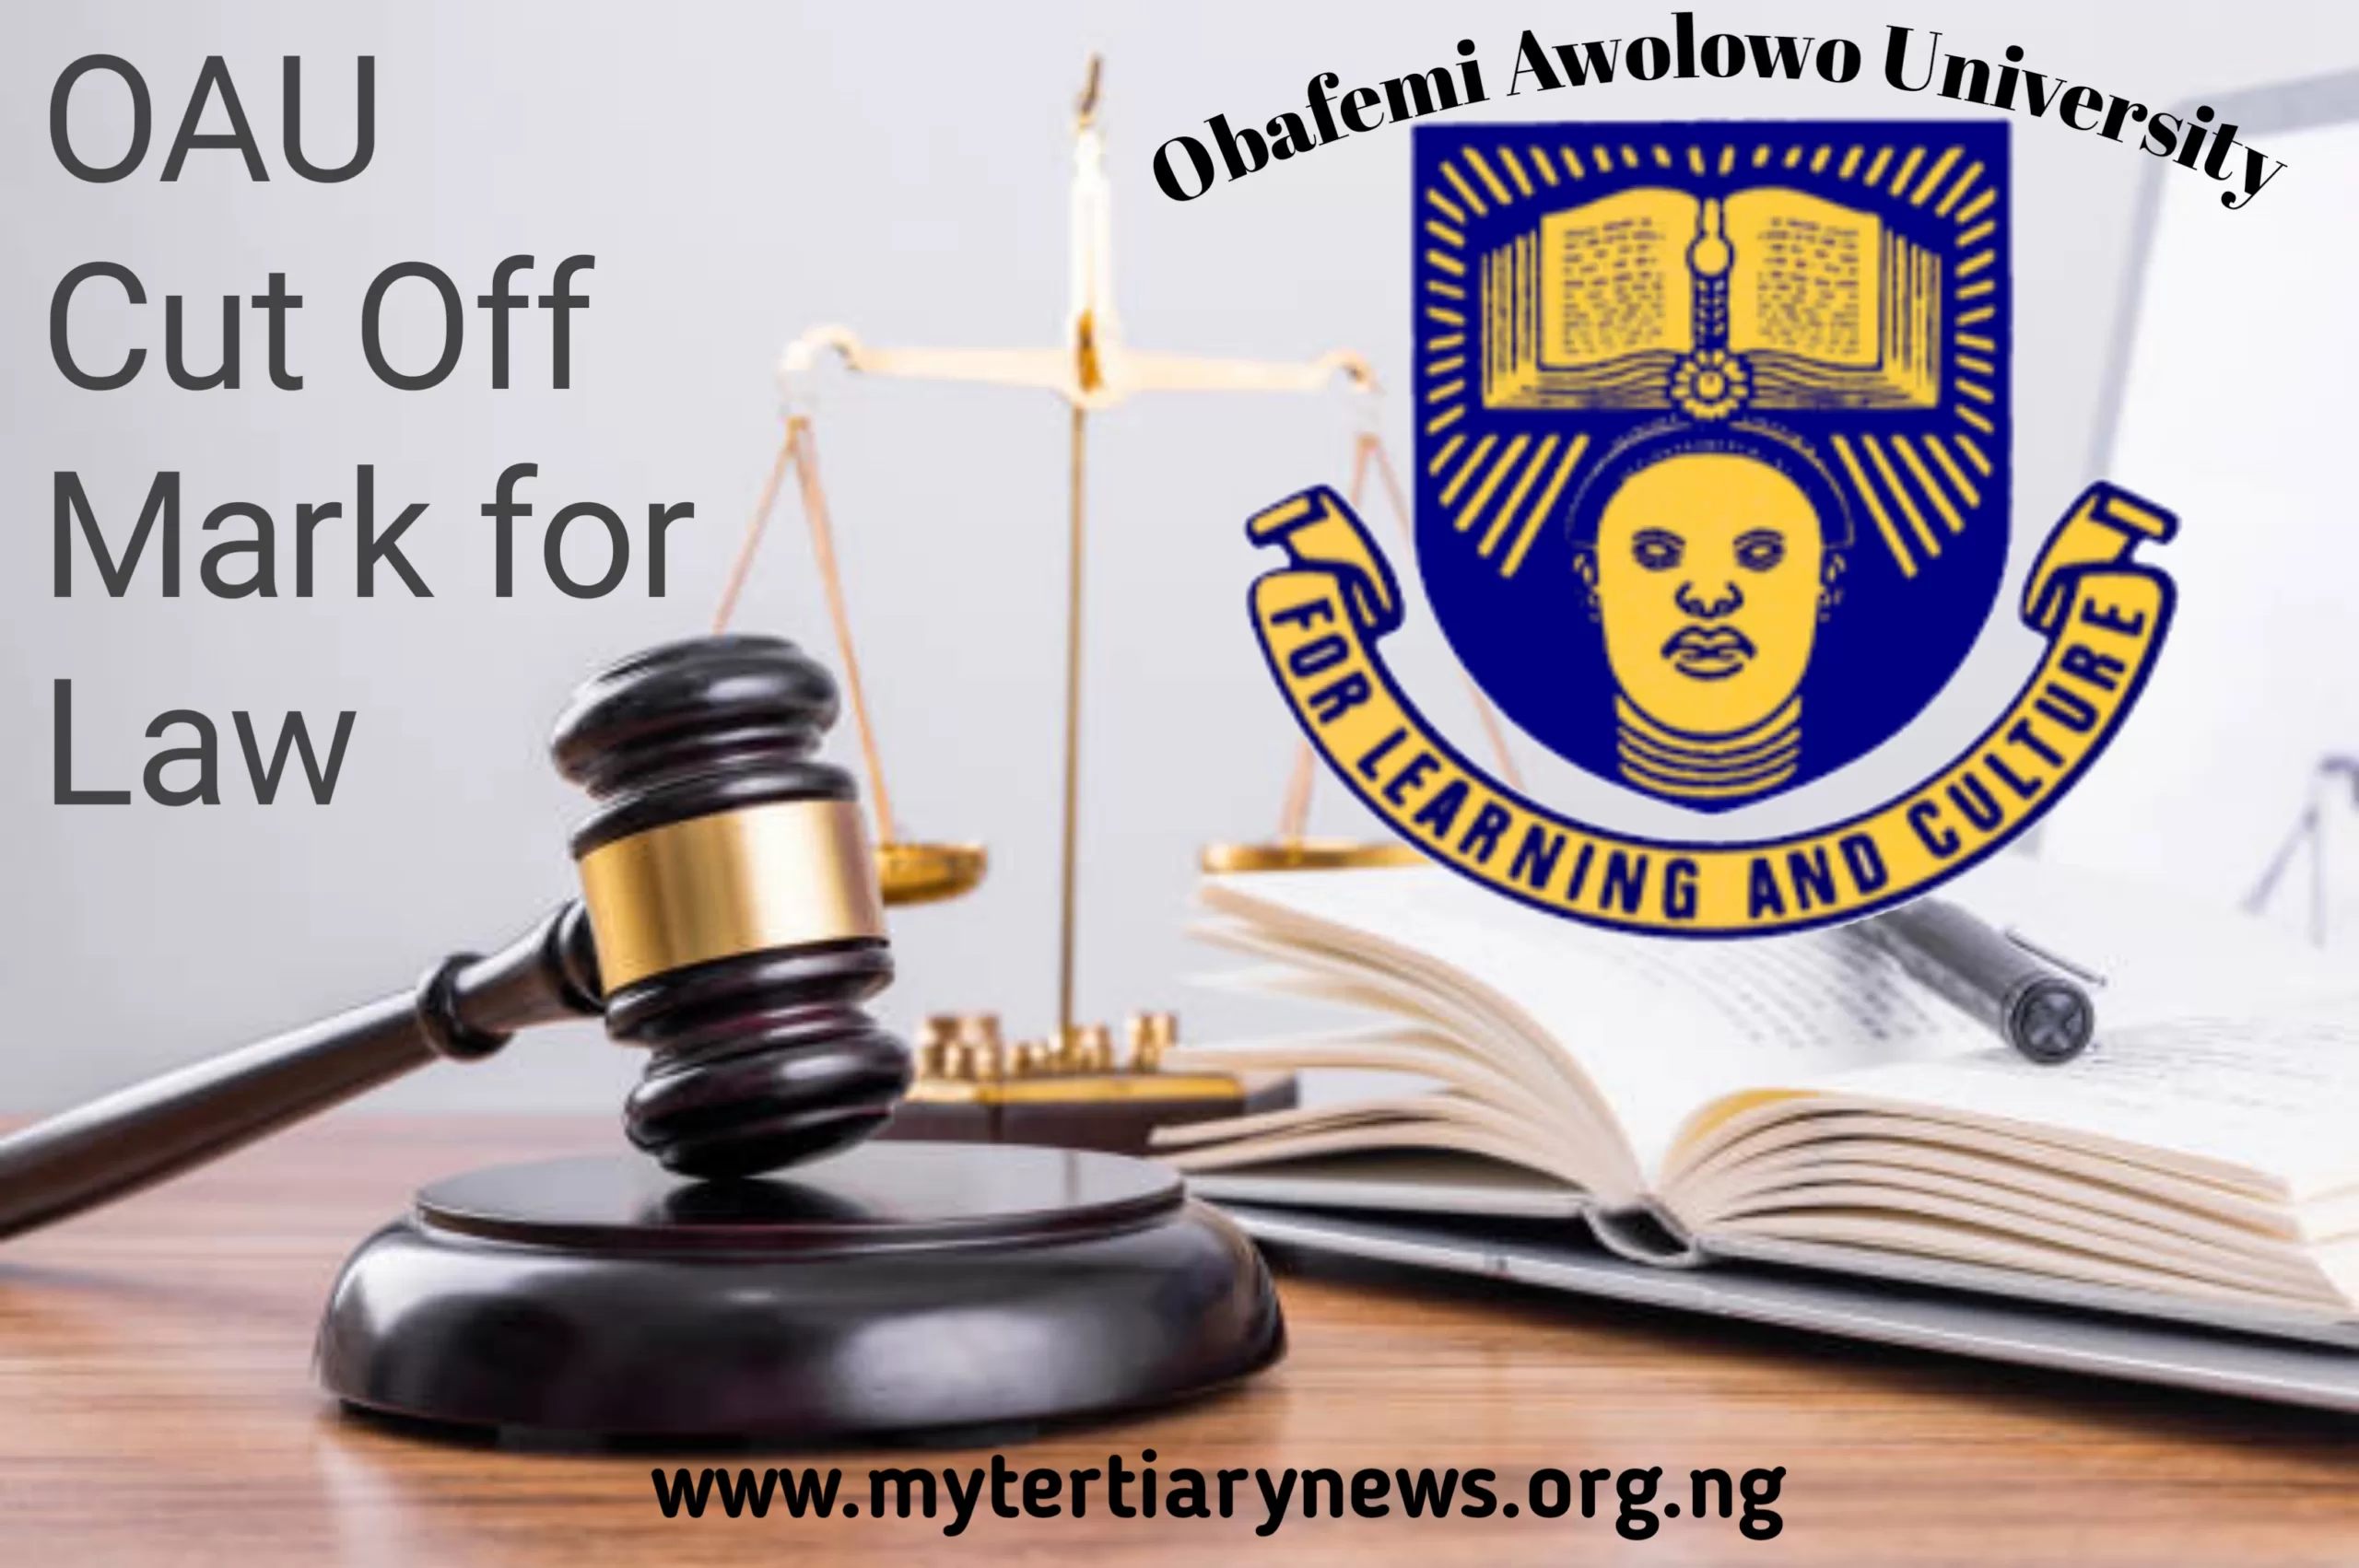 OAU Image || OAU Cut Off Mark for Law